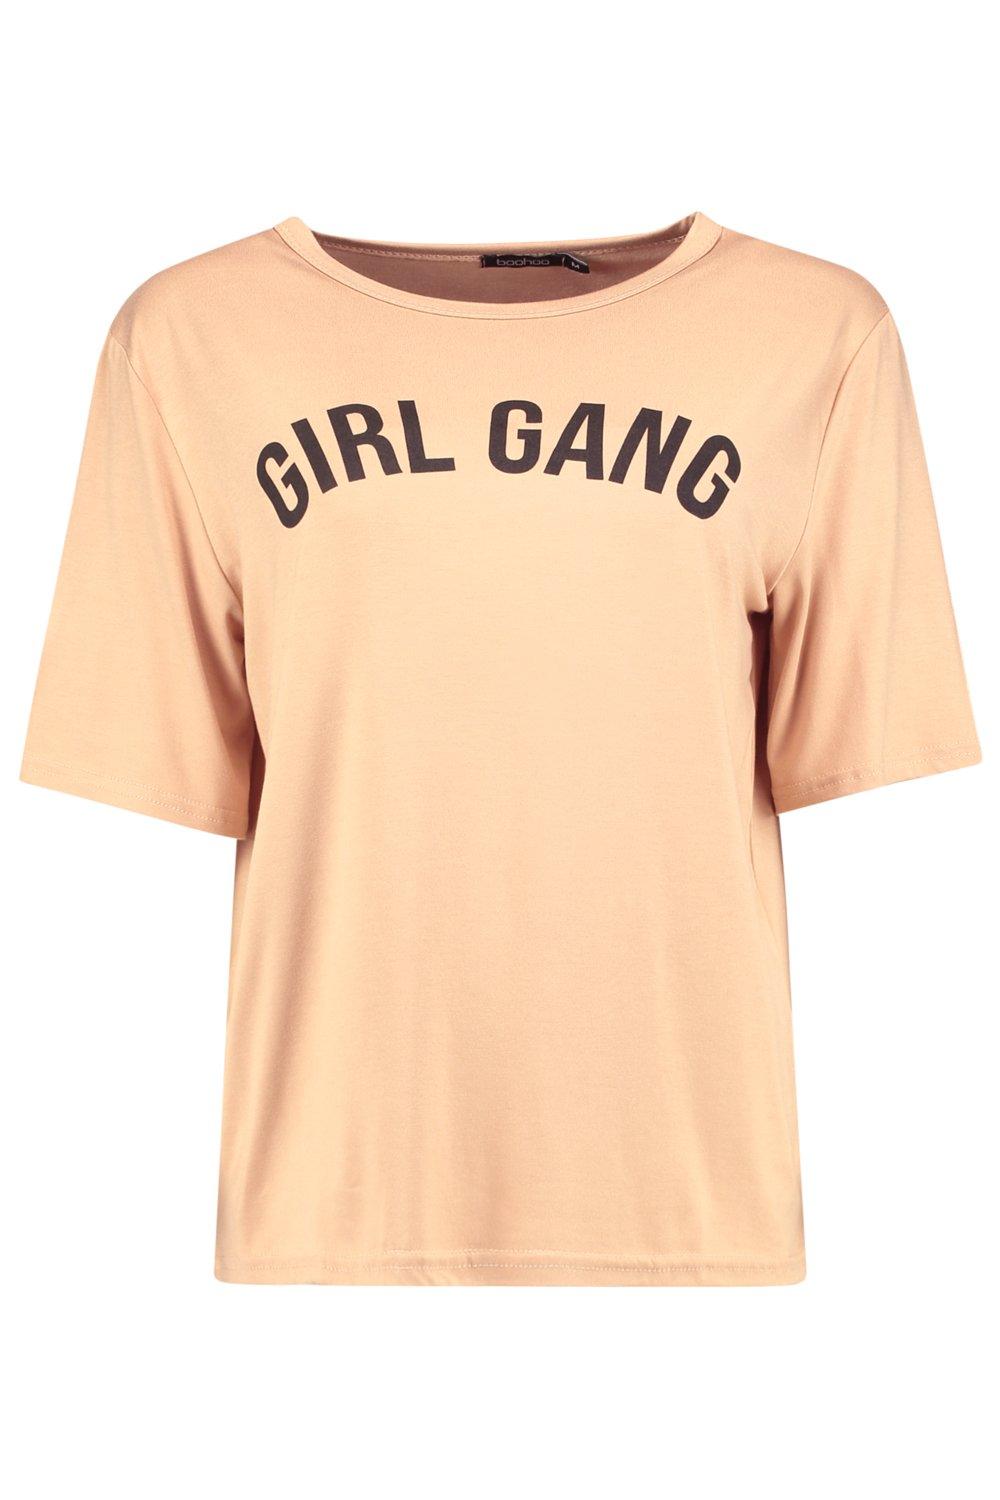 Overstijgen racket ik ontbijt Girl gang Orange T-shirt - Basic tees shop